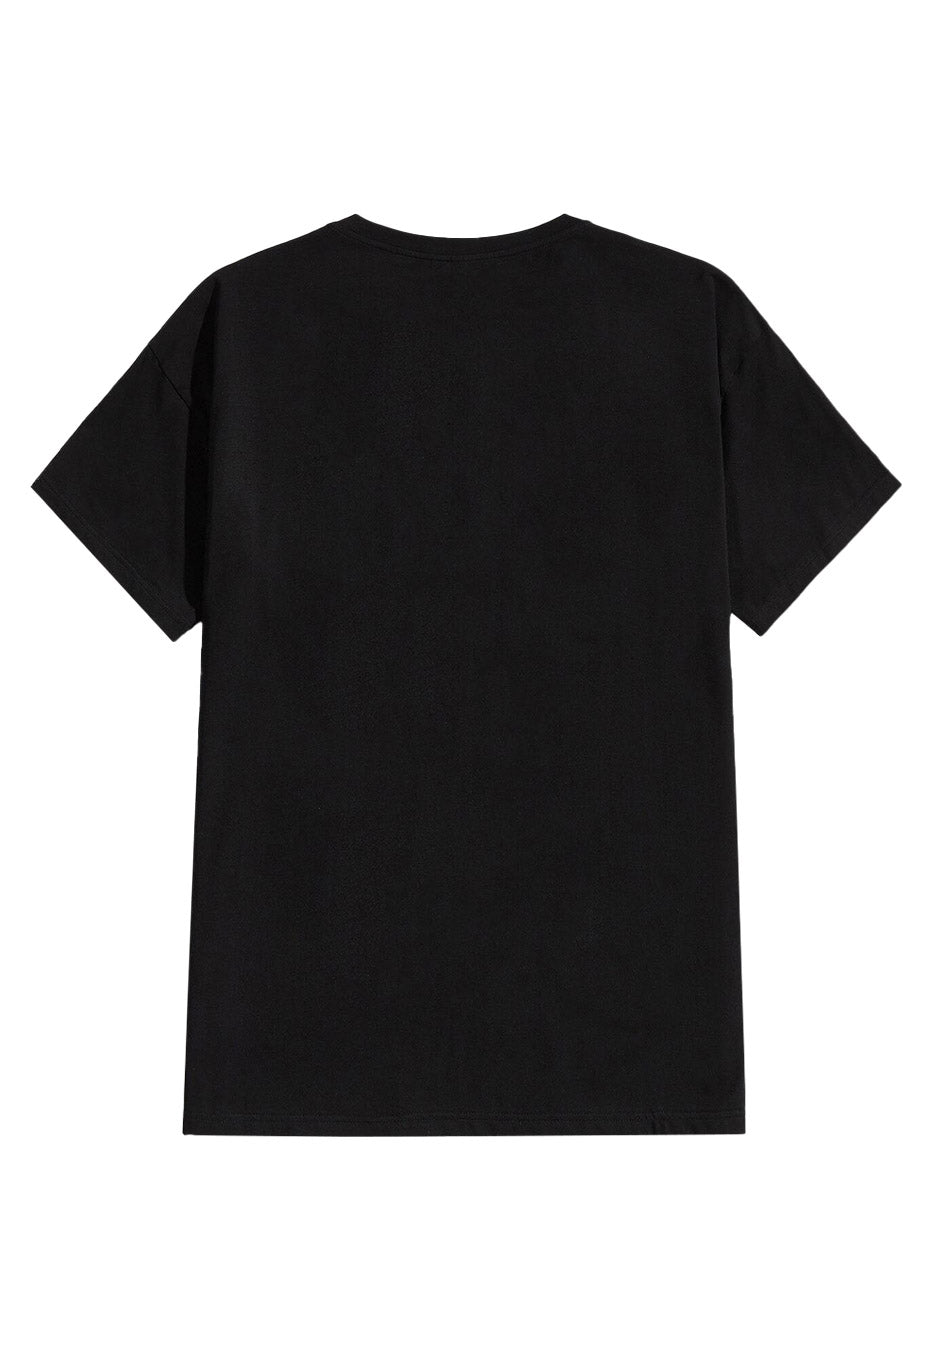 Spite - Reaper - T-Shirt | Neutral-Image